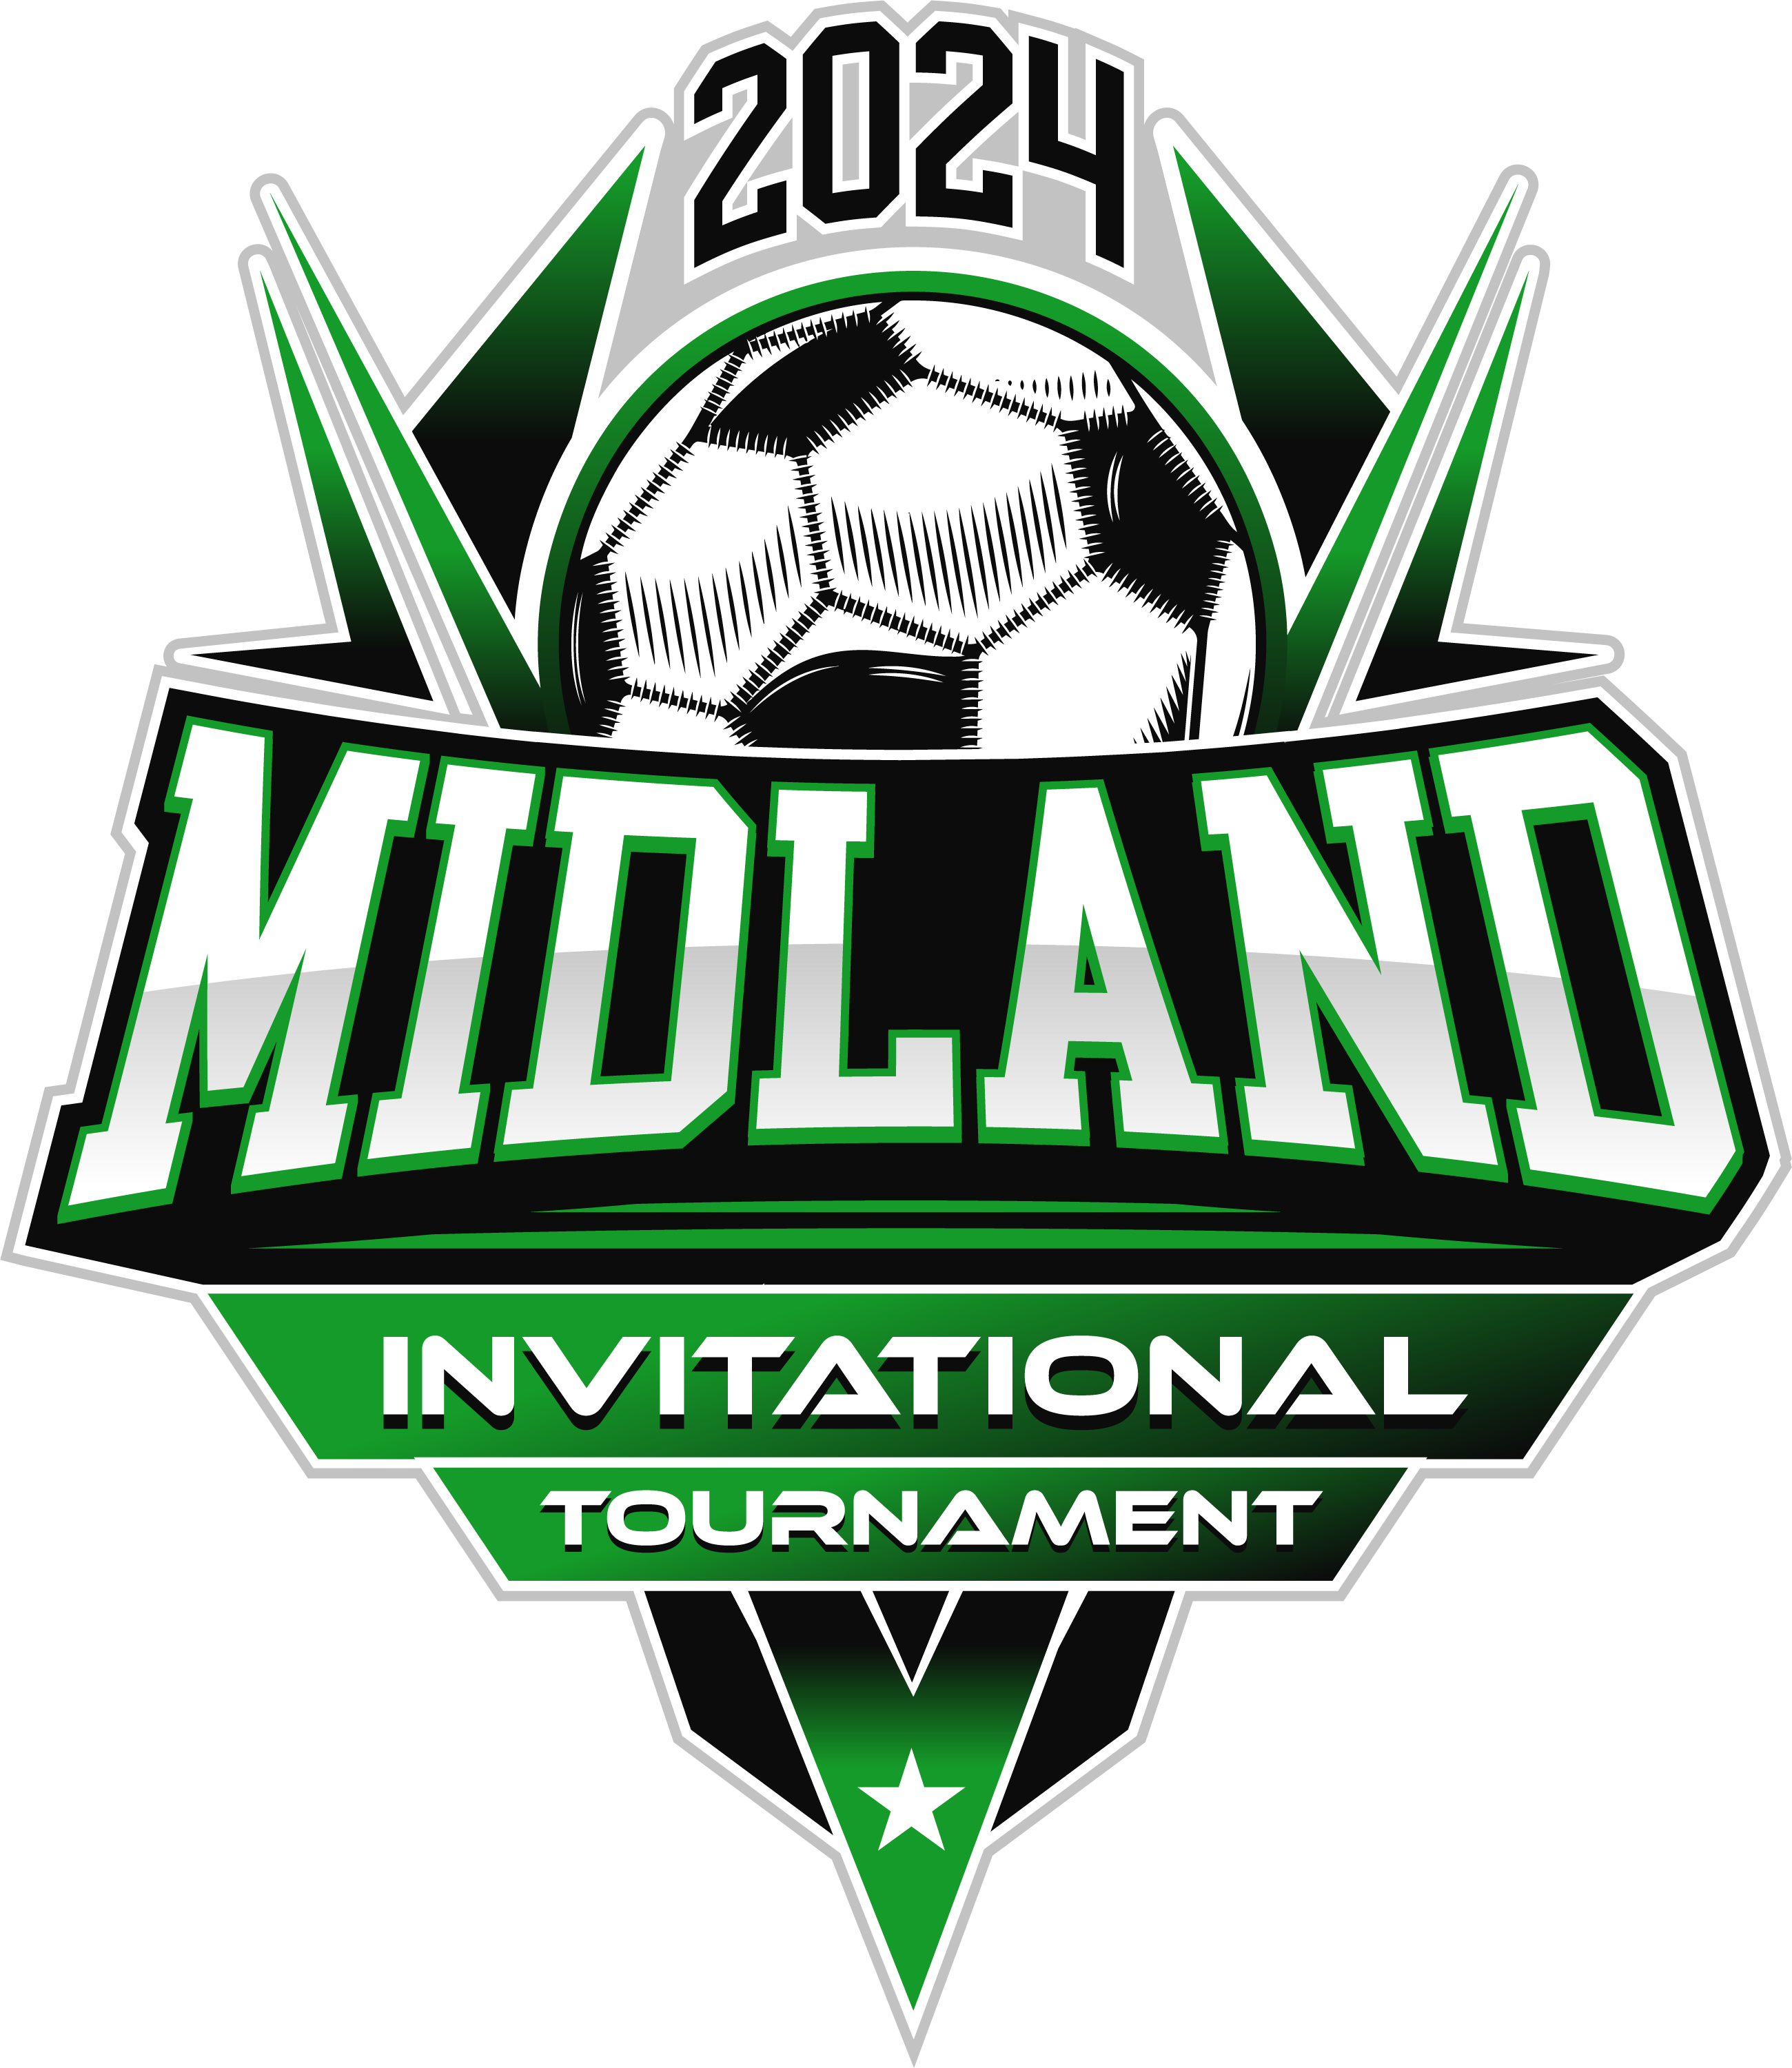 Welcome to the 2024 Midland Invitational Tournament